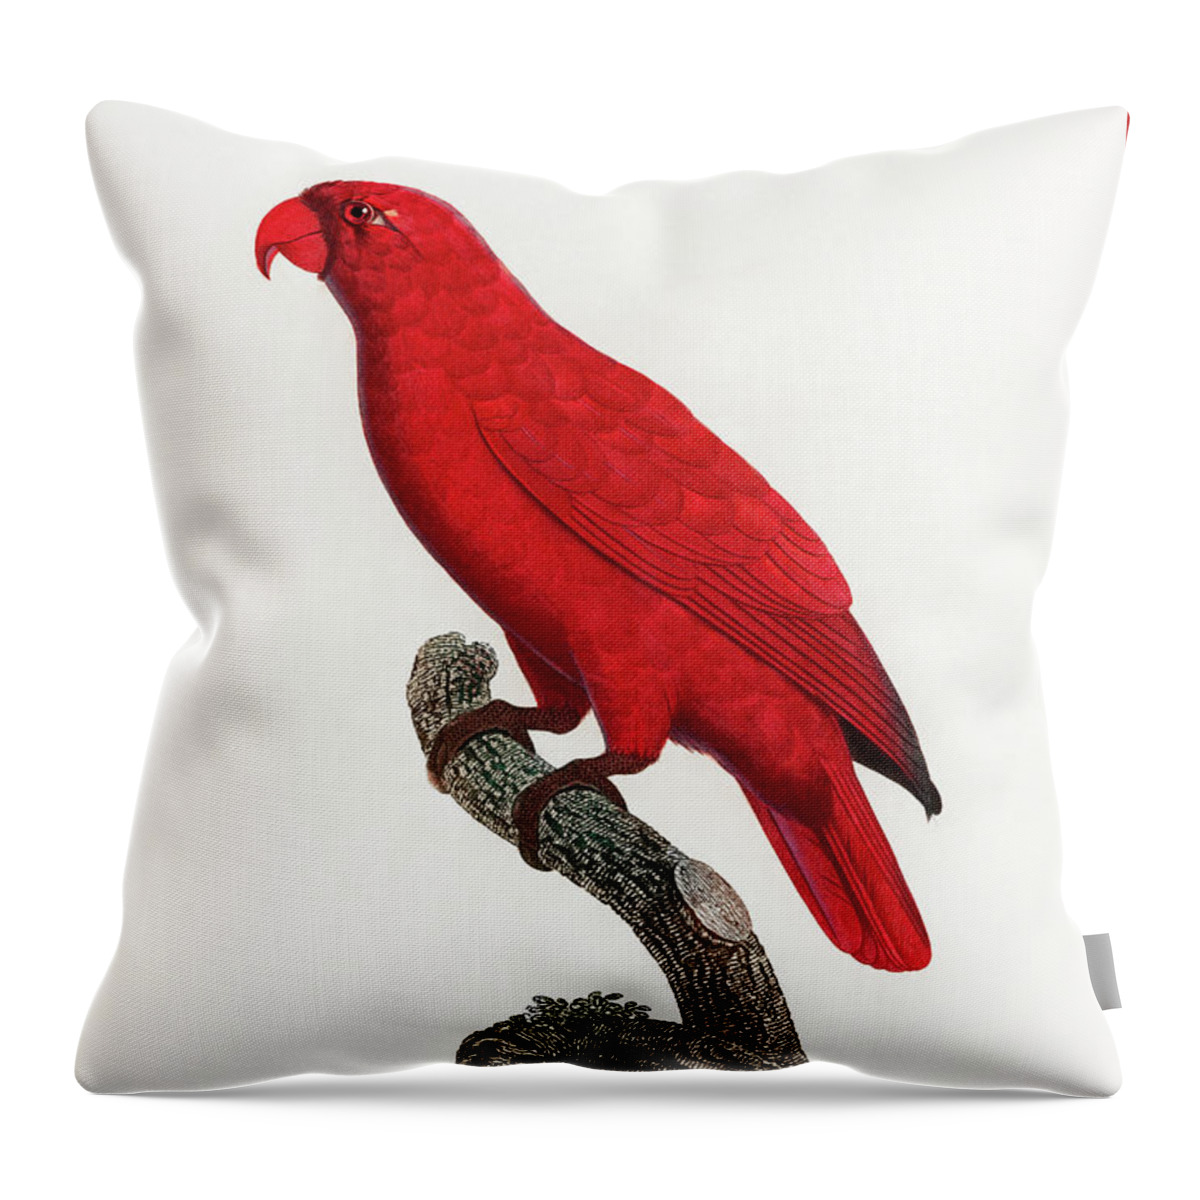 Cardinal Lory Throw Pillow featuring the mixed media Cardinal Lory by World Art Collective